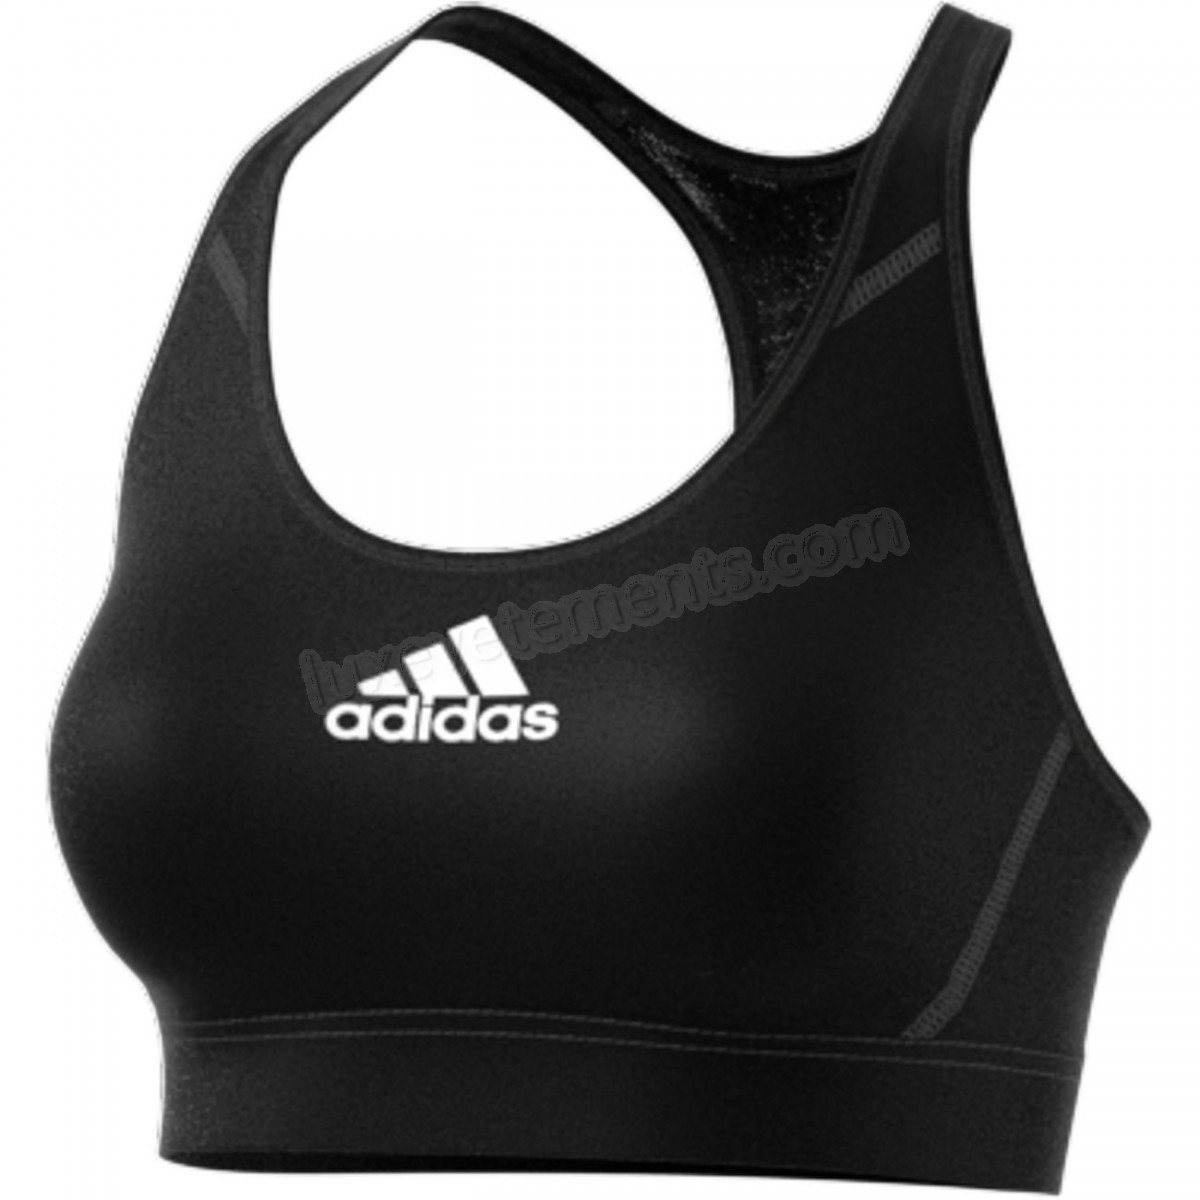 Adidas-Fitness femme ADIDAS Brassière adidas Don't Rest Alphaskin Padded Vente en ligne - -4